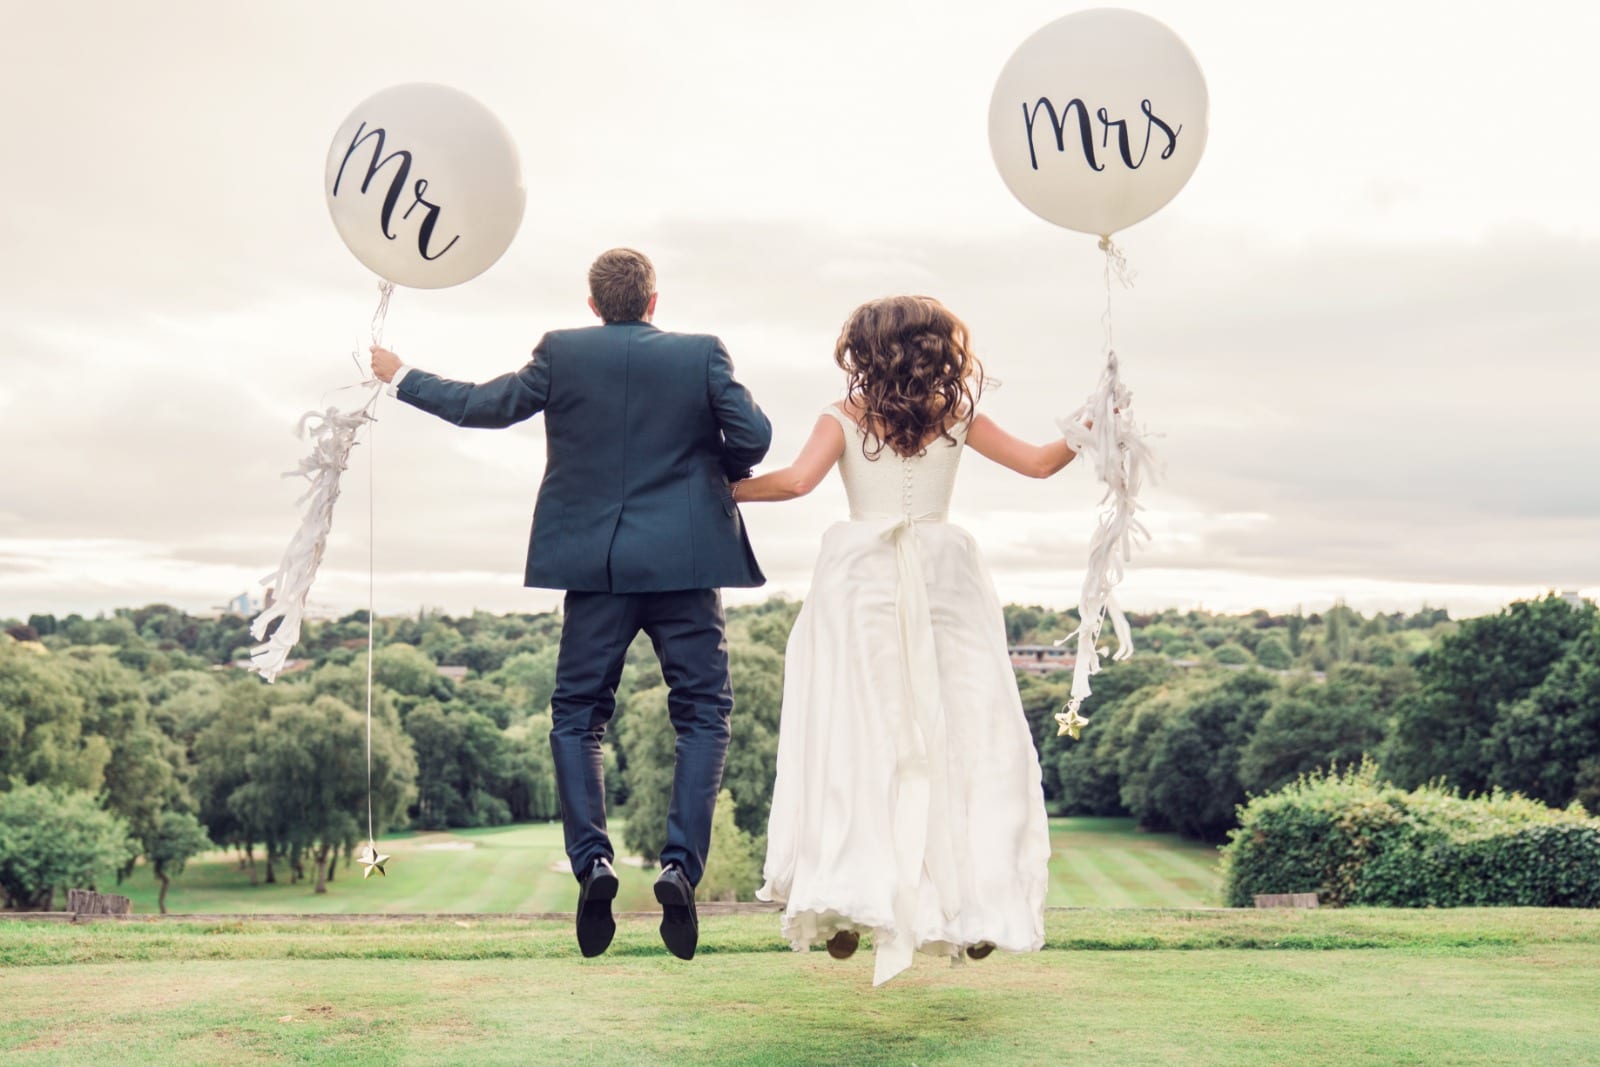 mr and mrs white wedding balloons